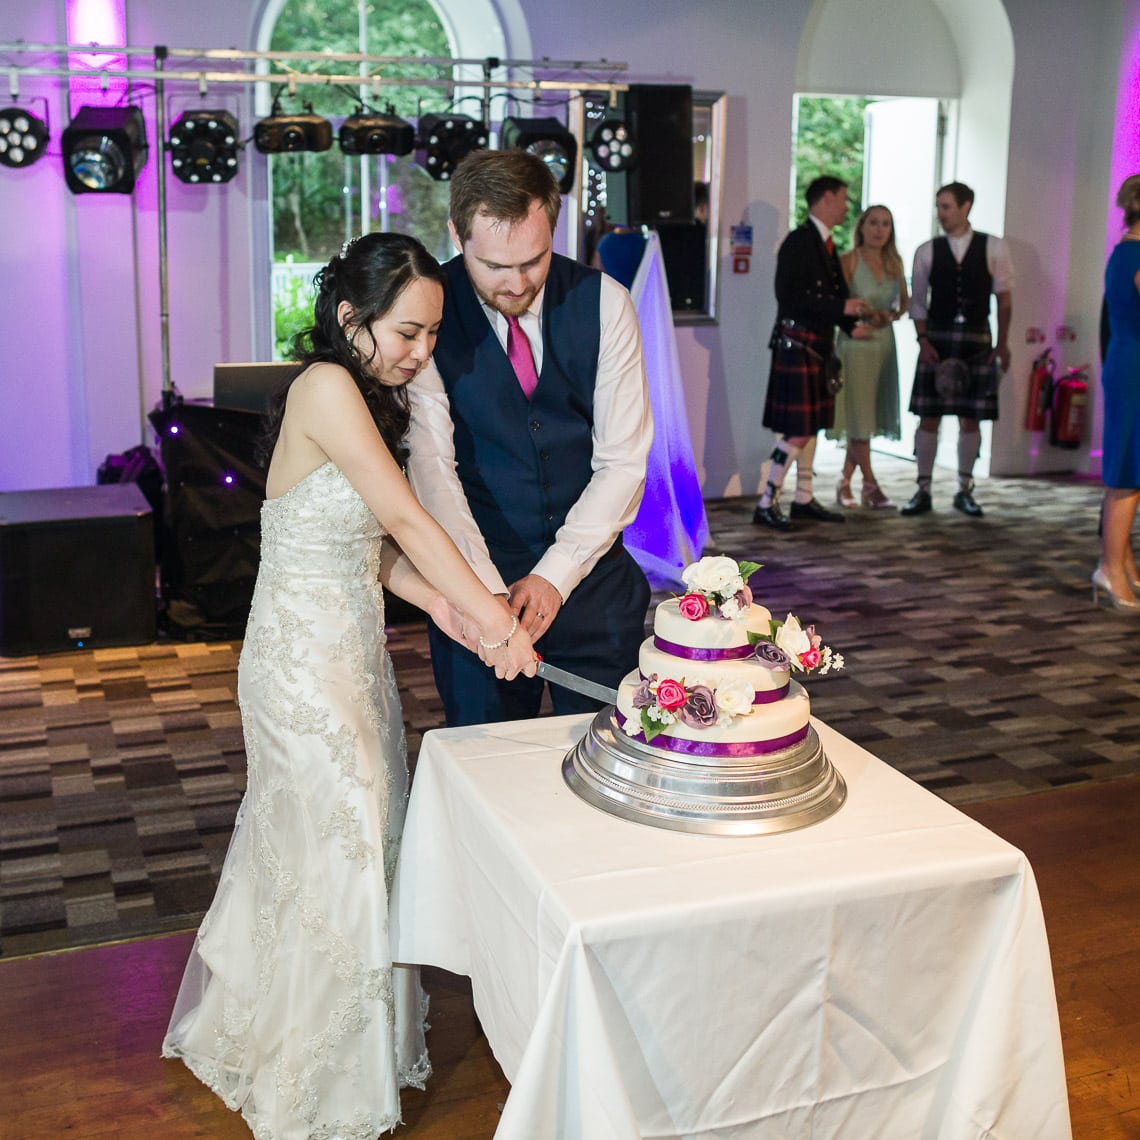 Newlyweds cut their wedding cake on the dancefloor.